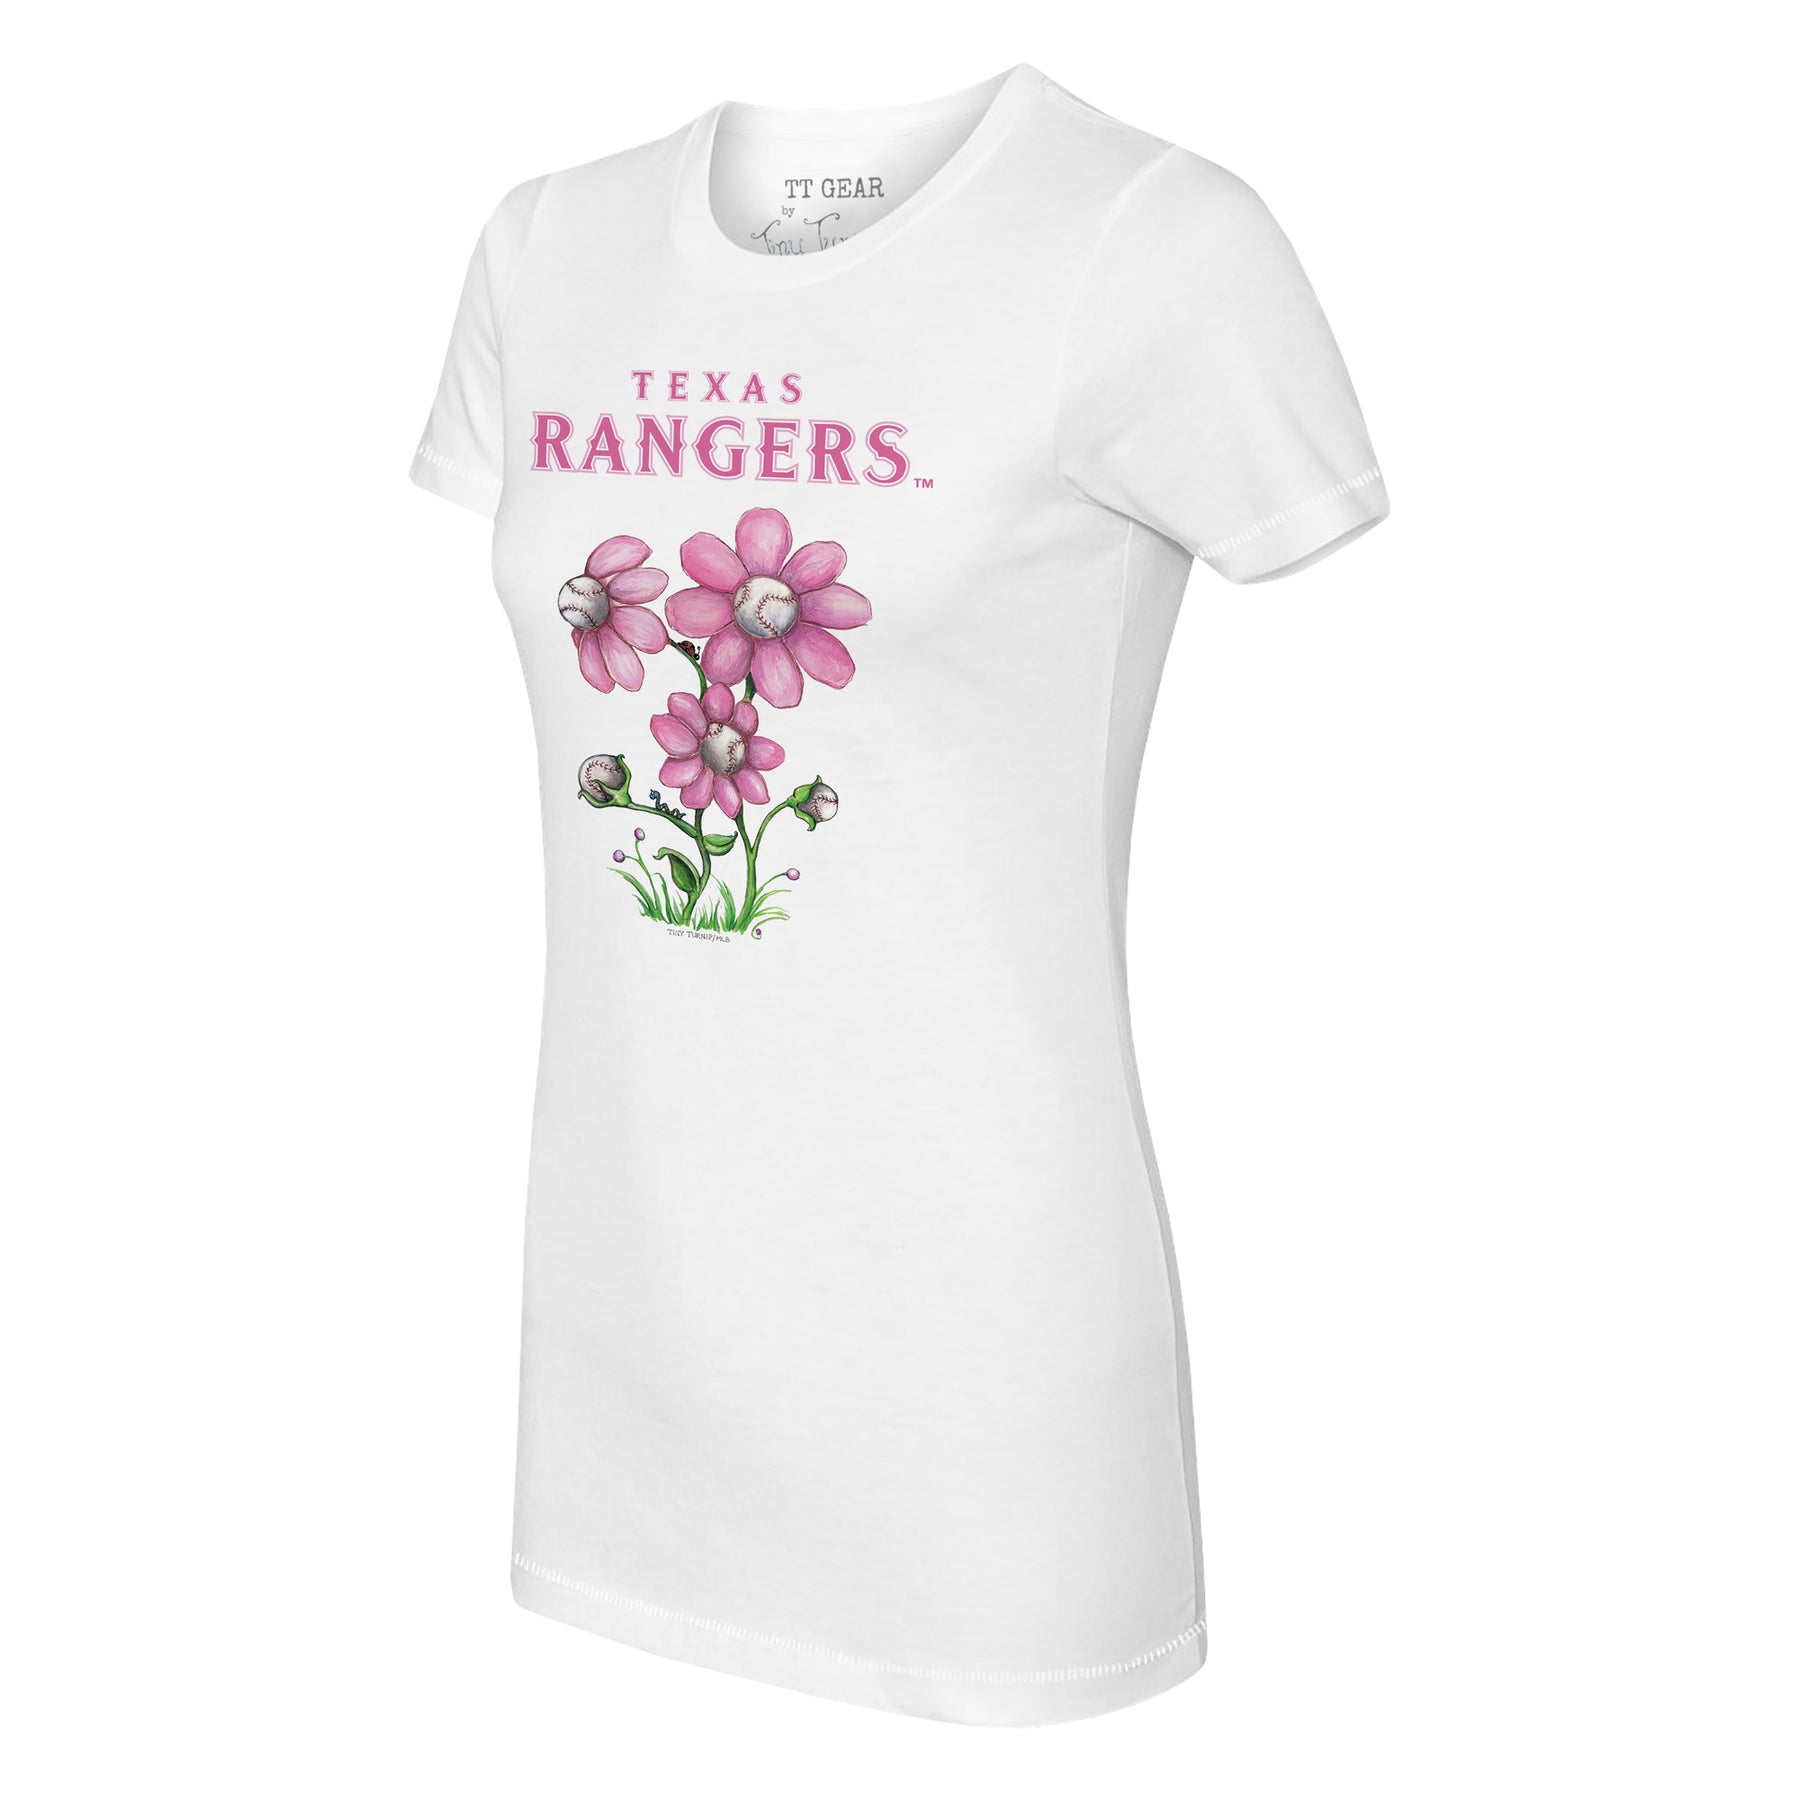 Texas Rangers Blooming Baseballs Tee Shirt Women's Small / White